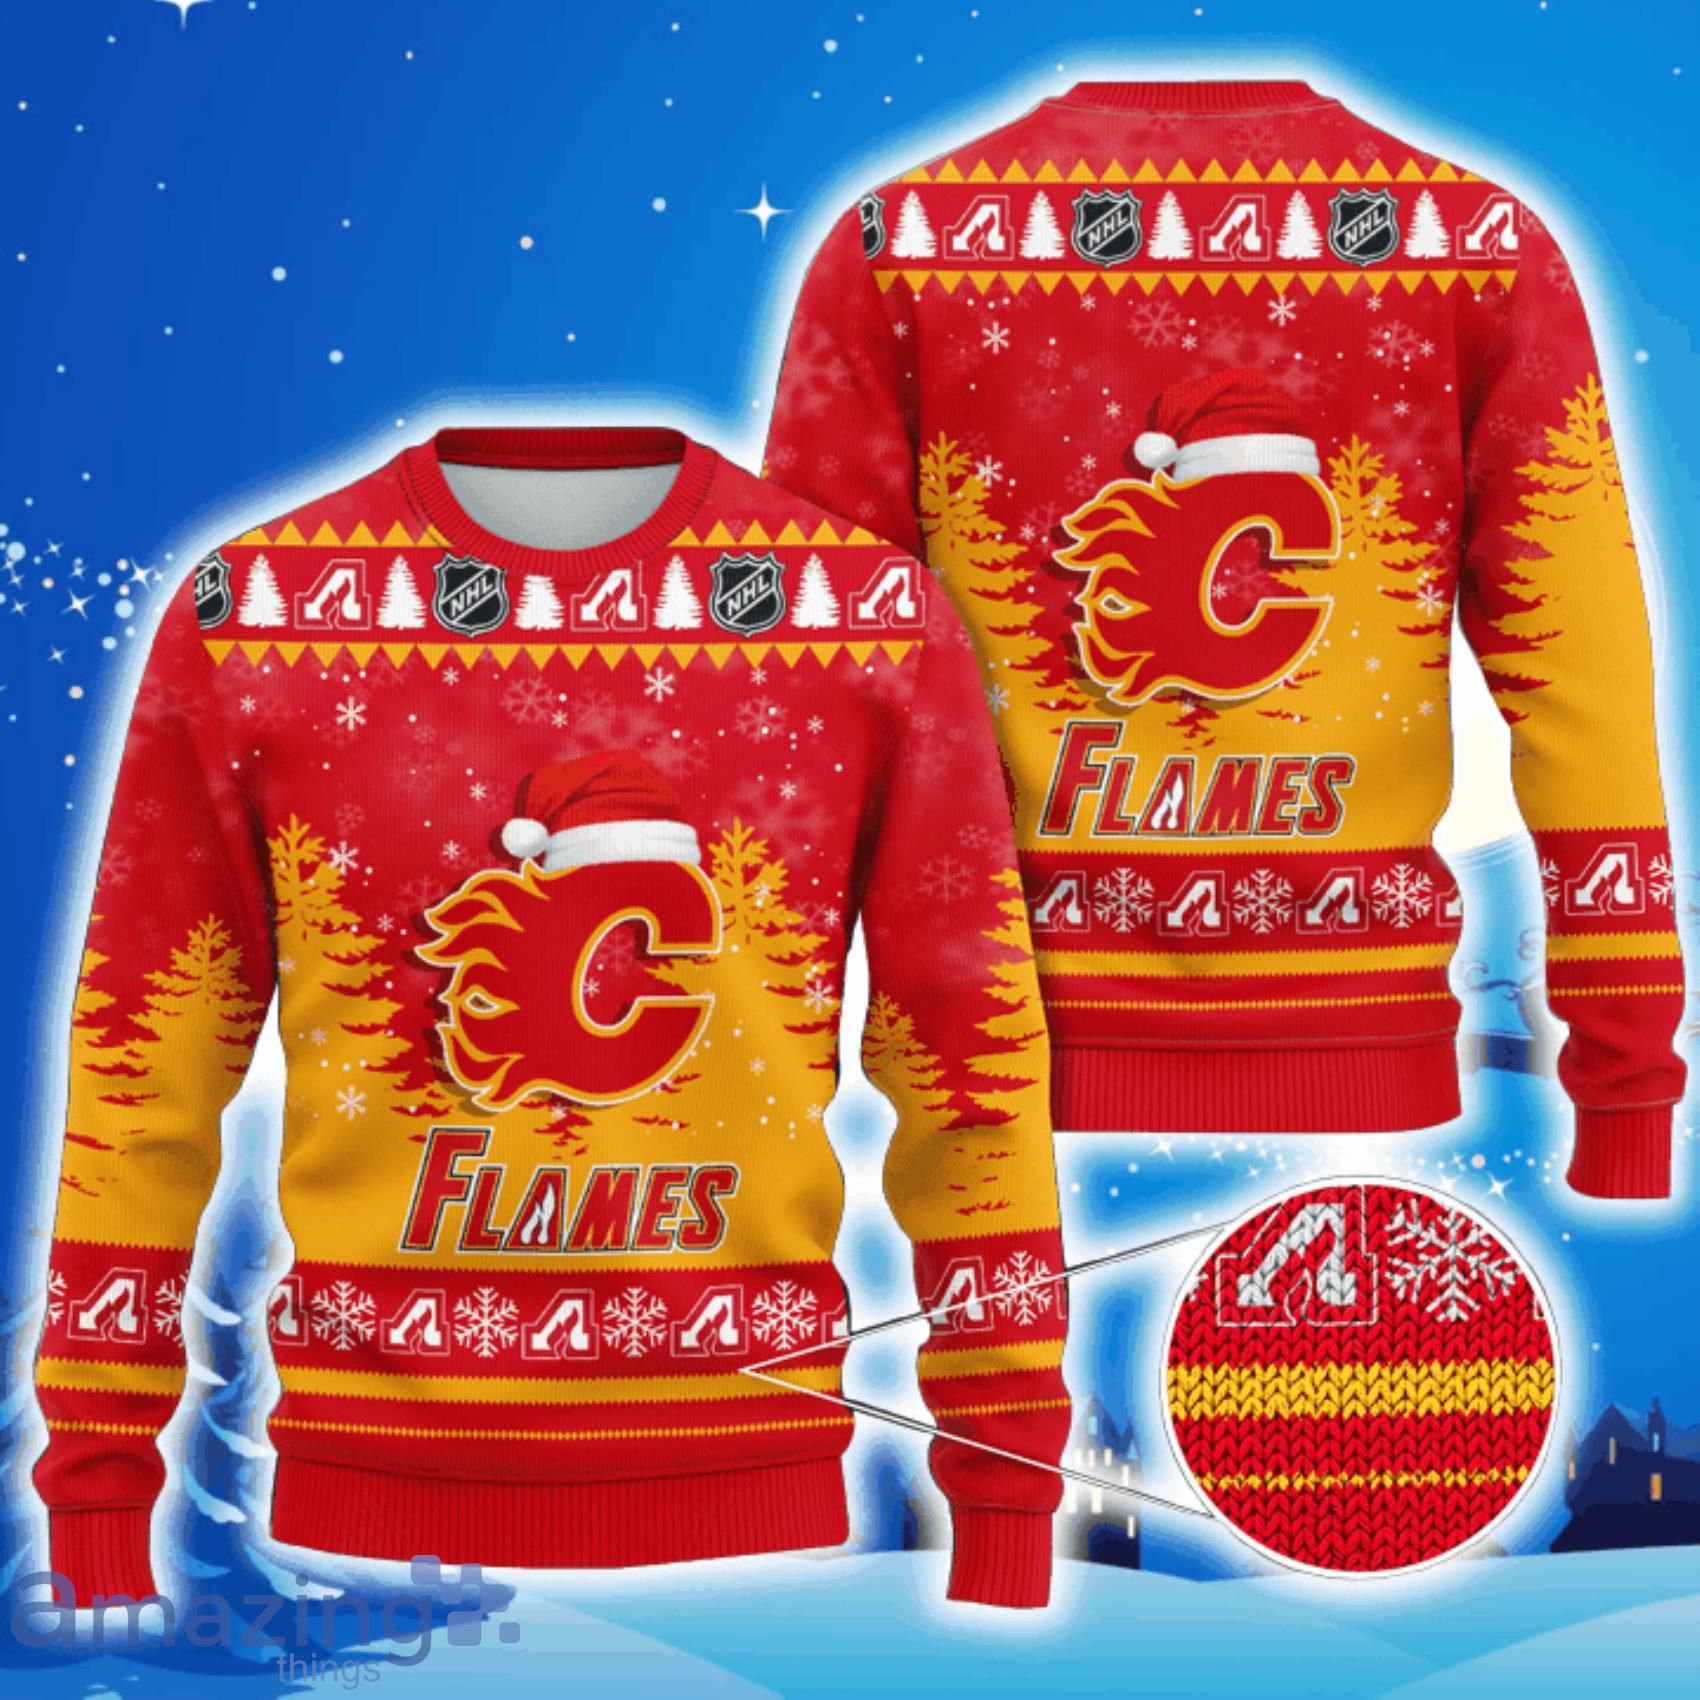 Calgary Flames Women's Apparel, Flames Ladies Jerseys, Clothing